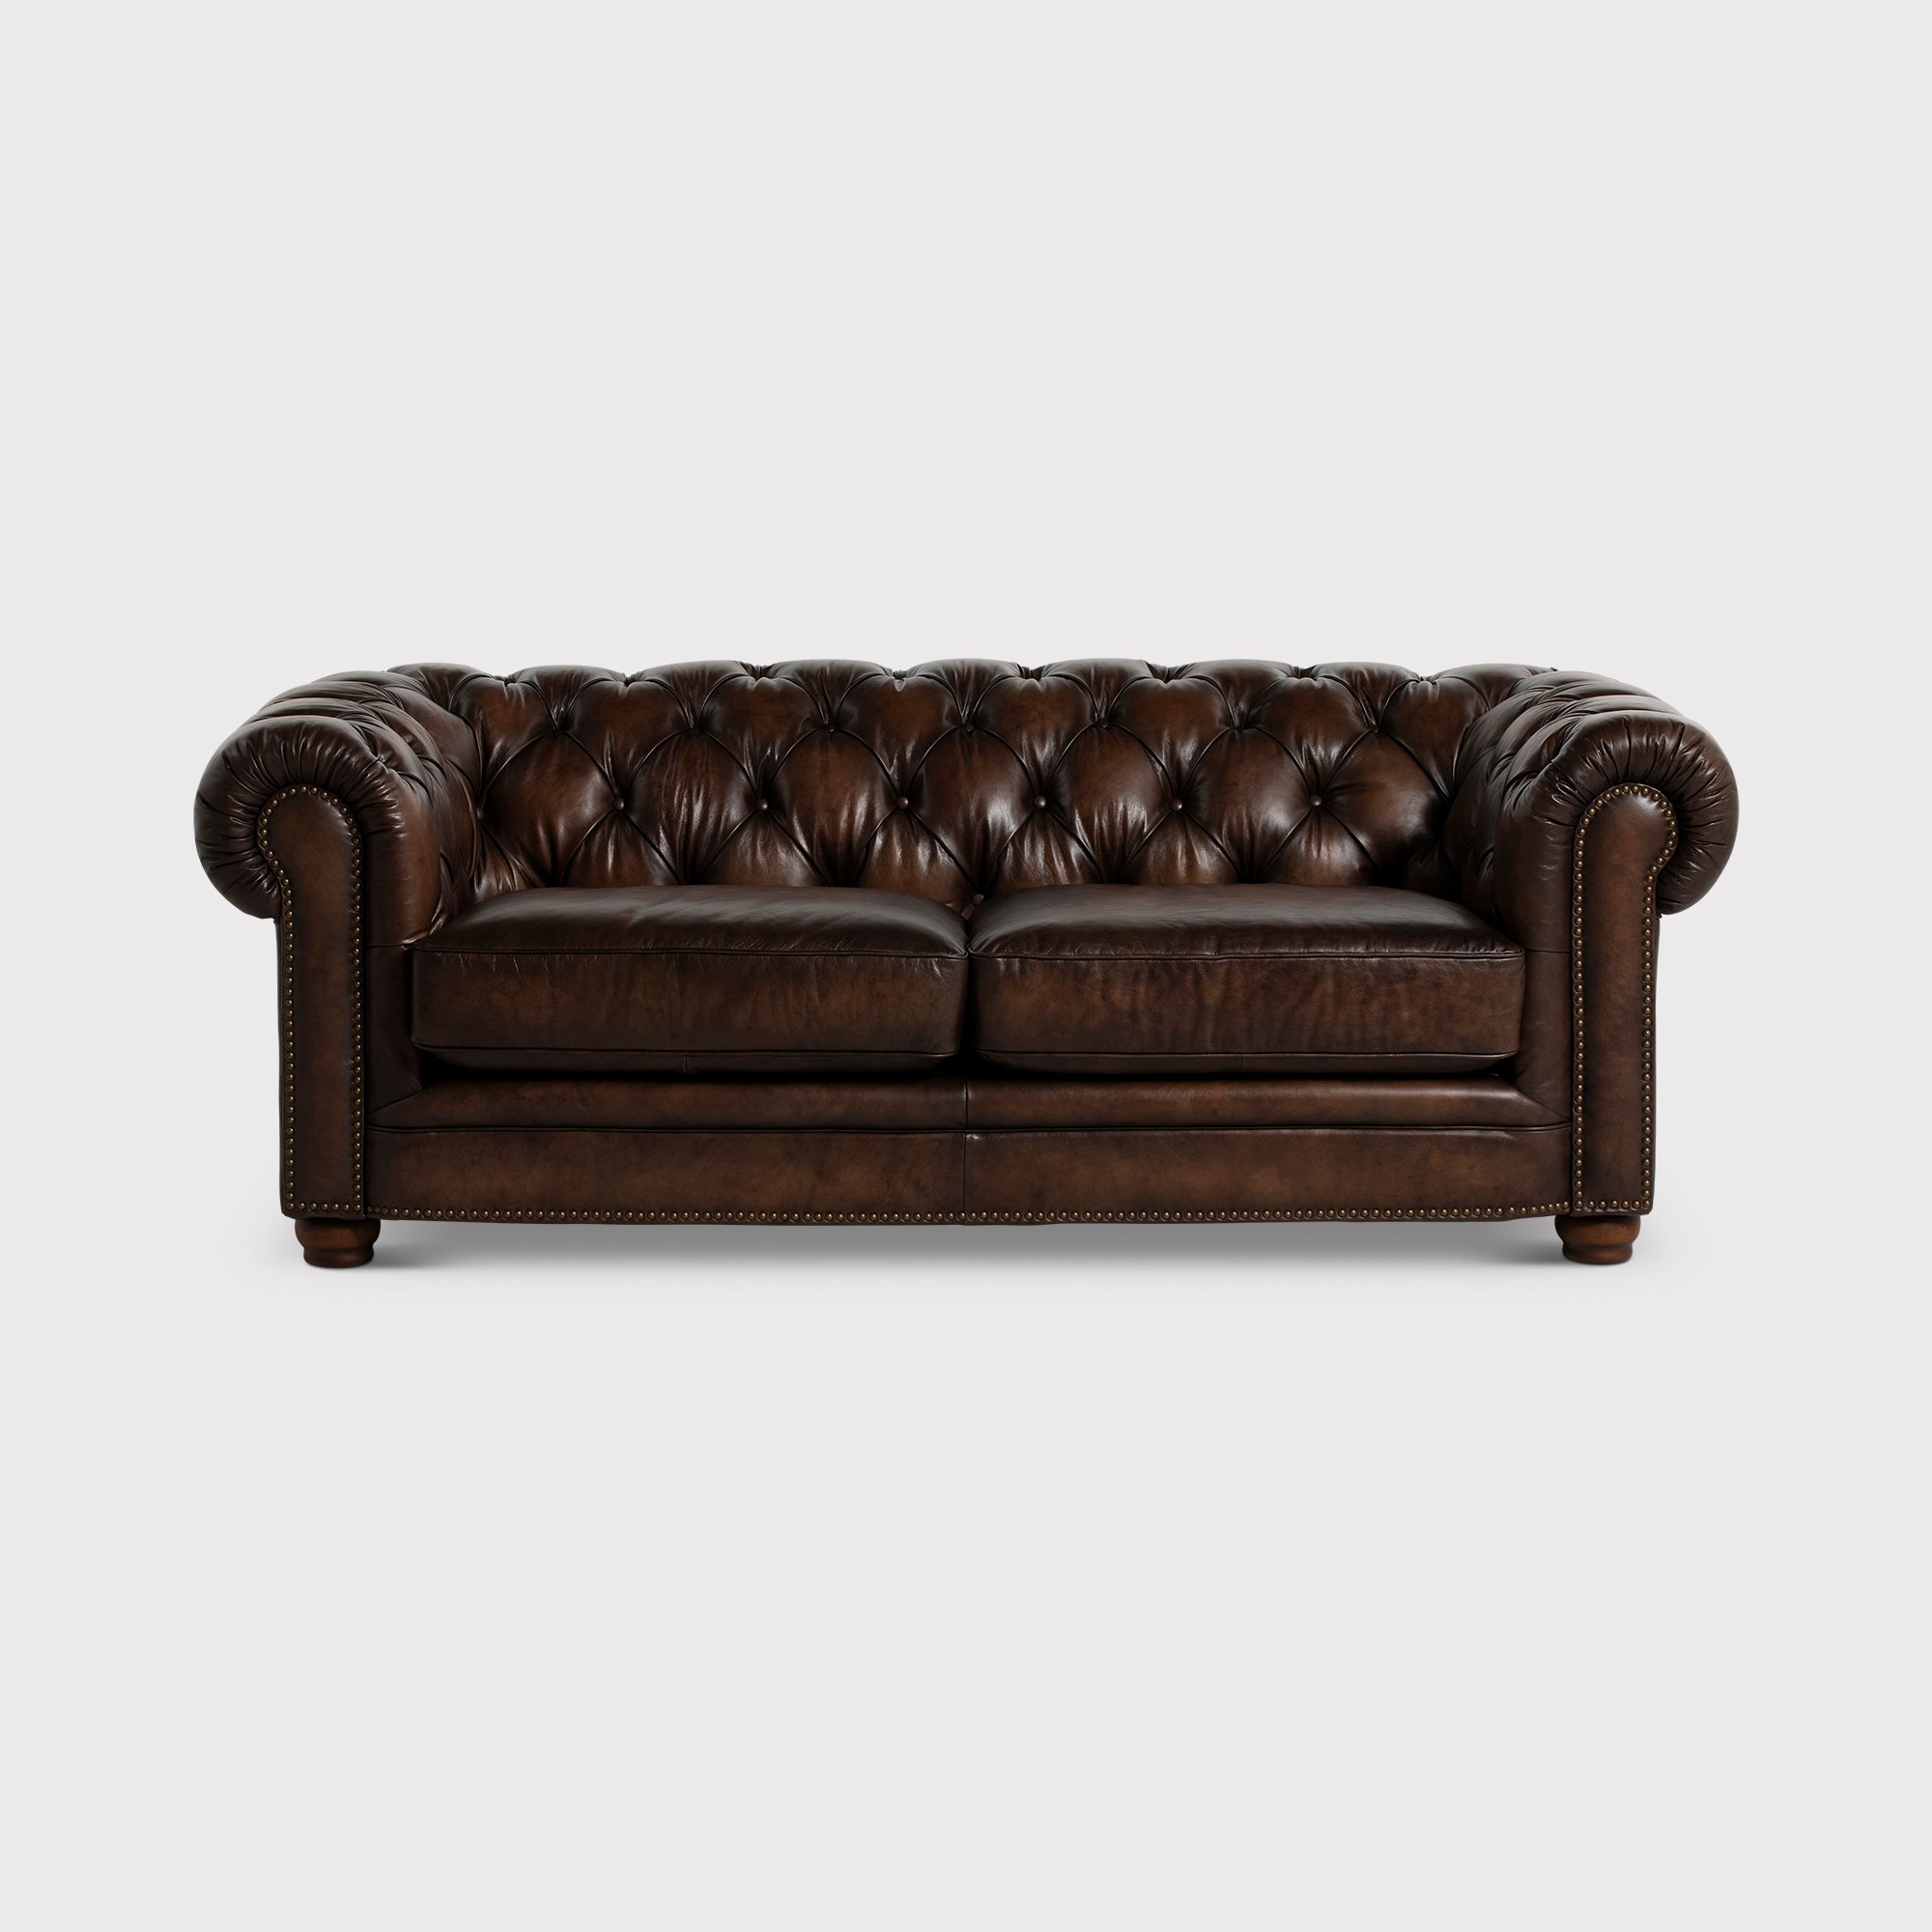 Everett 3 Seater Chesterfield Sofa, Brown Fabric | Barker & Stonehouse